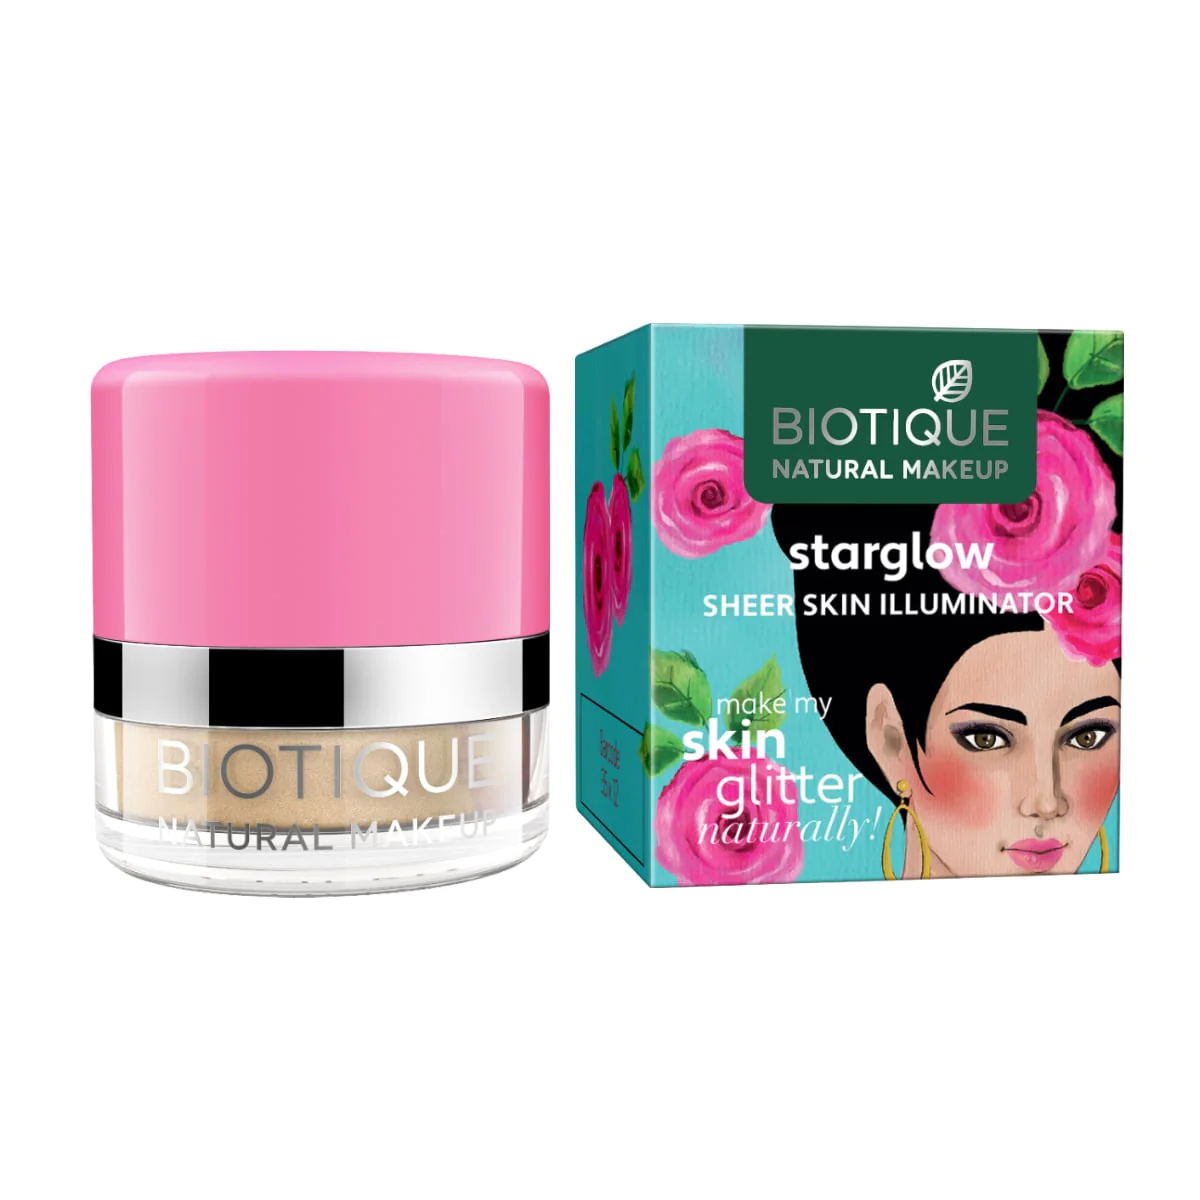 Biotique Natural Makeup Starglow Sheer Skin Illuminator, Rose N Quartz, 4g